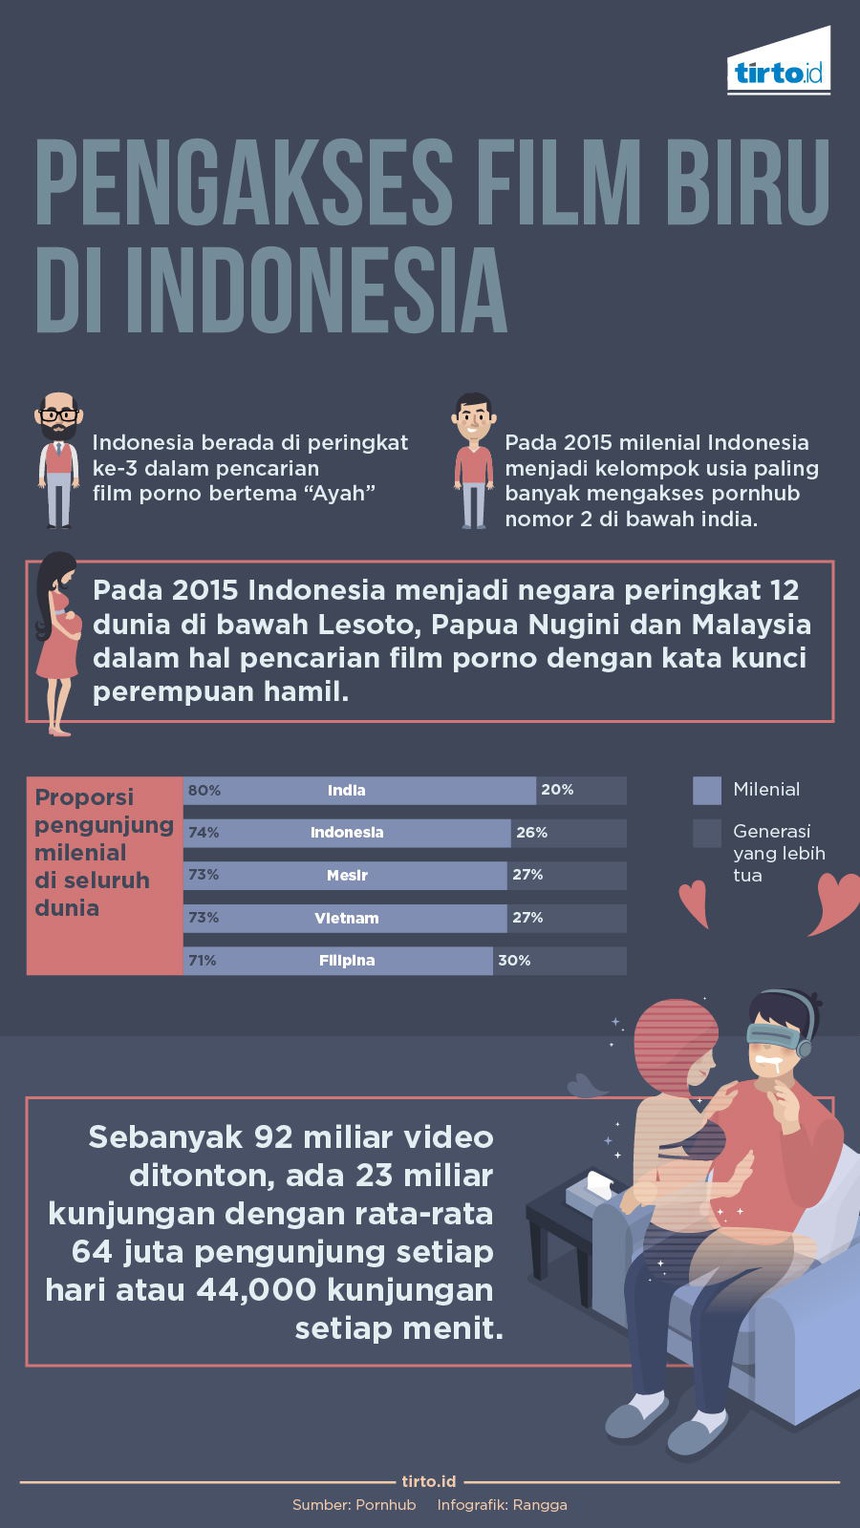 Orang Indonesia Di Film Biru Kaskus 